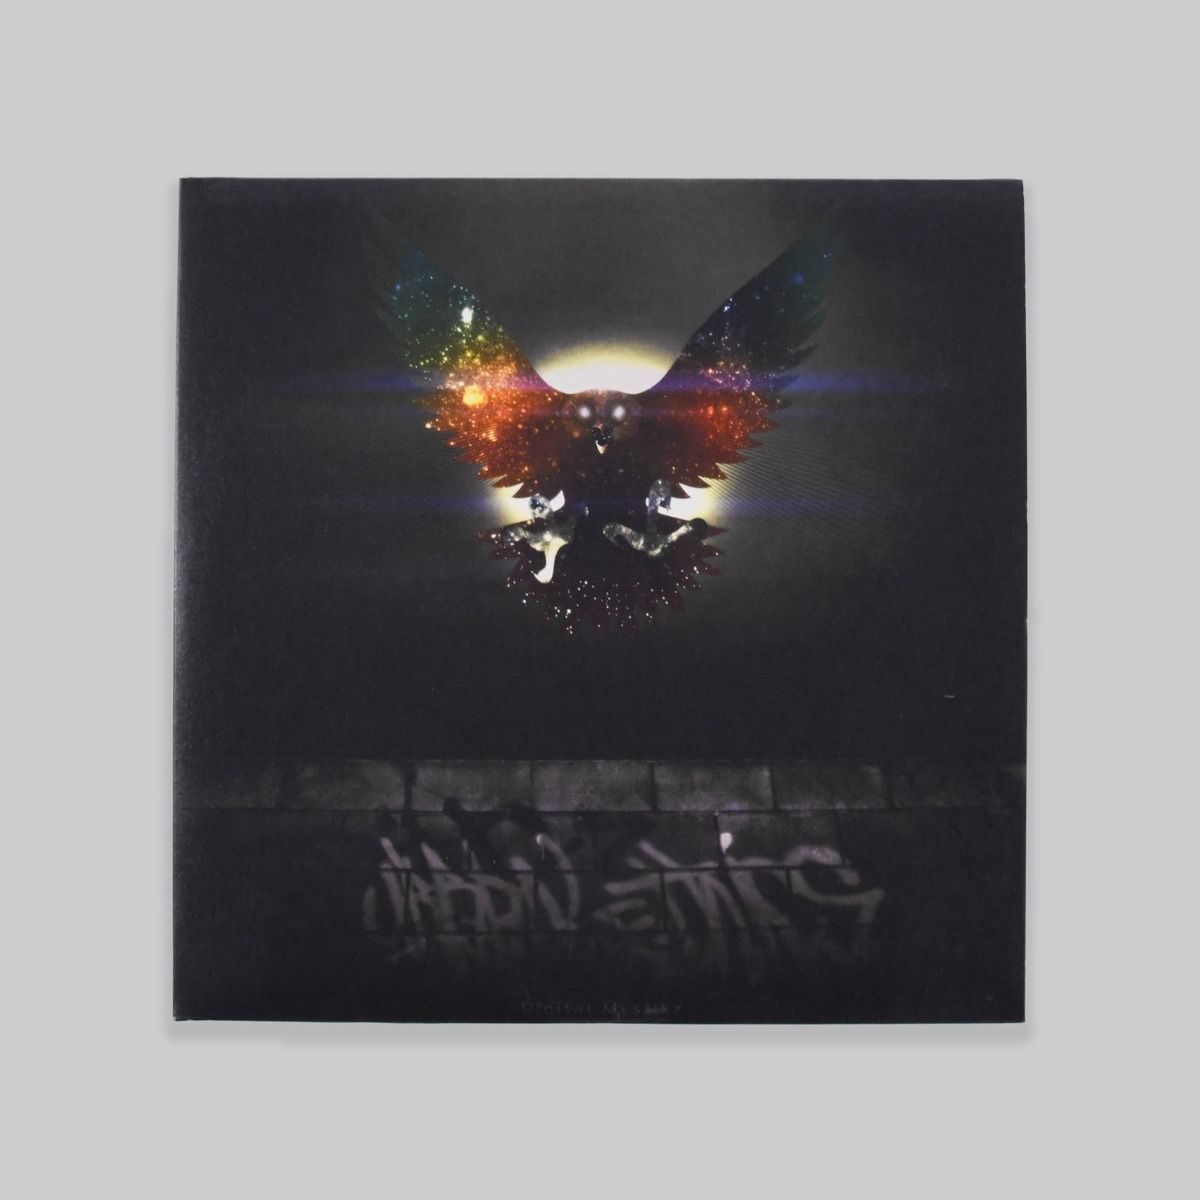 Digital Mystikz – Urban Ethics 3x12" LP